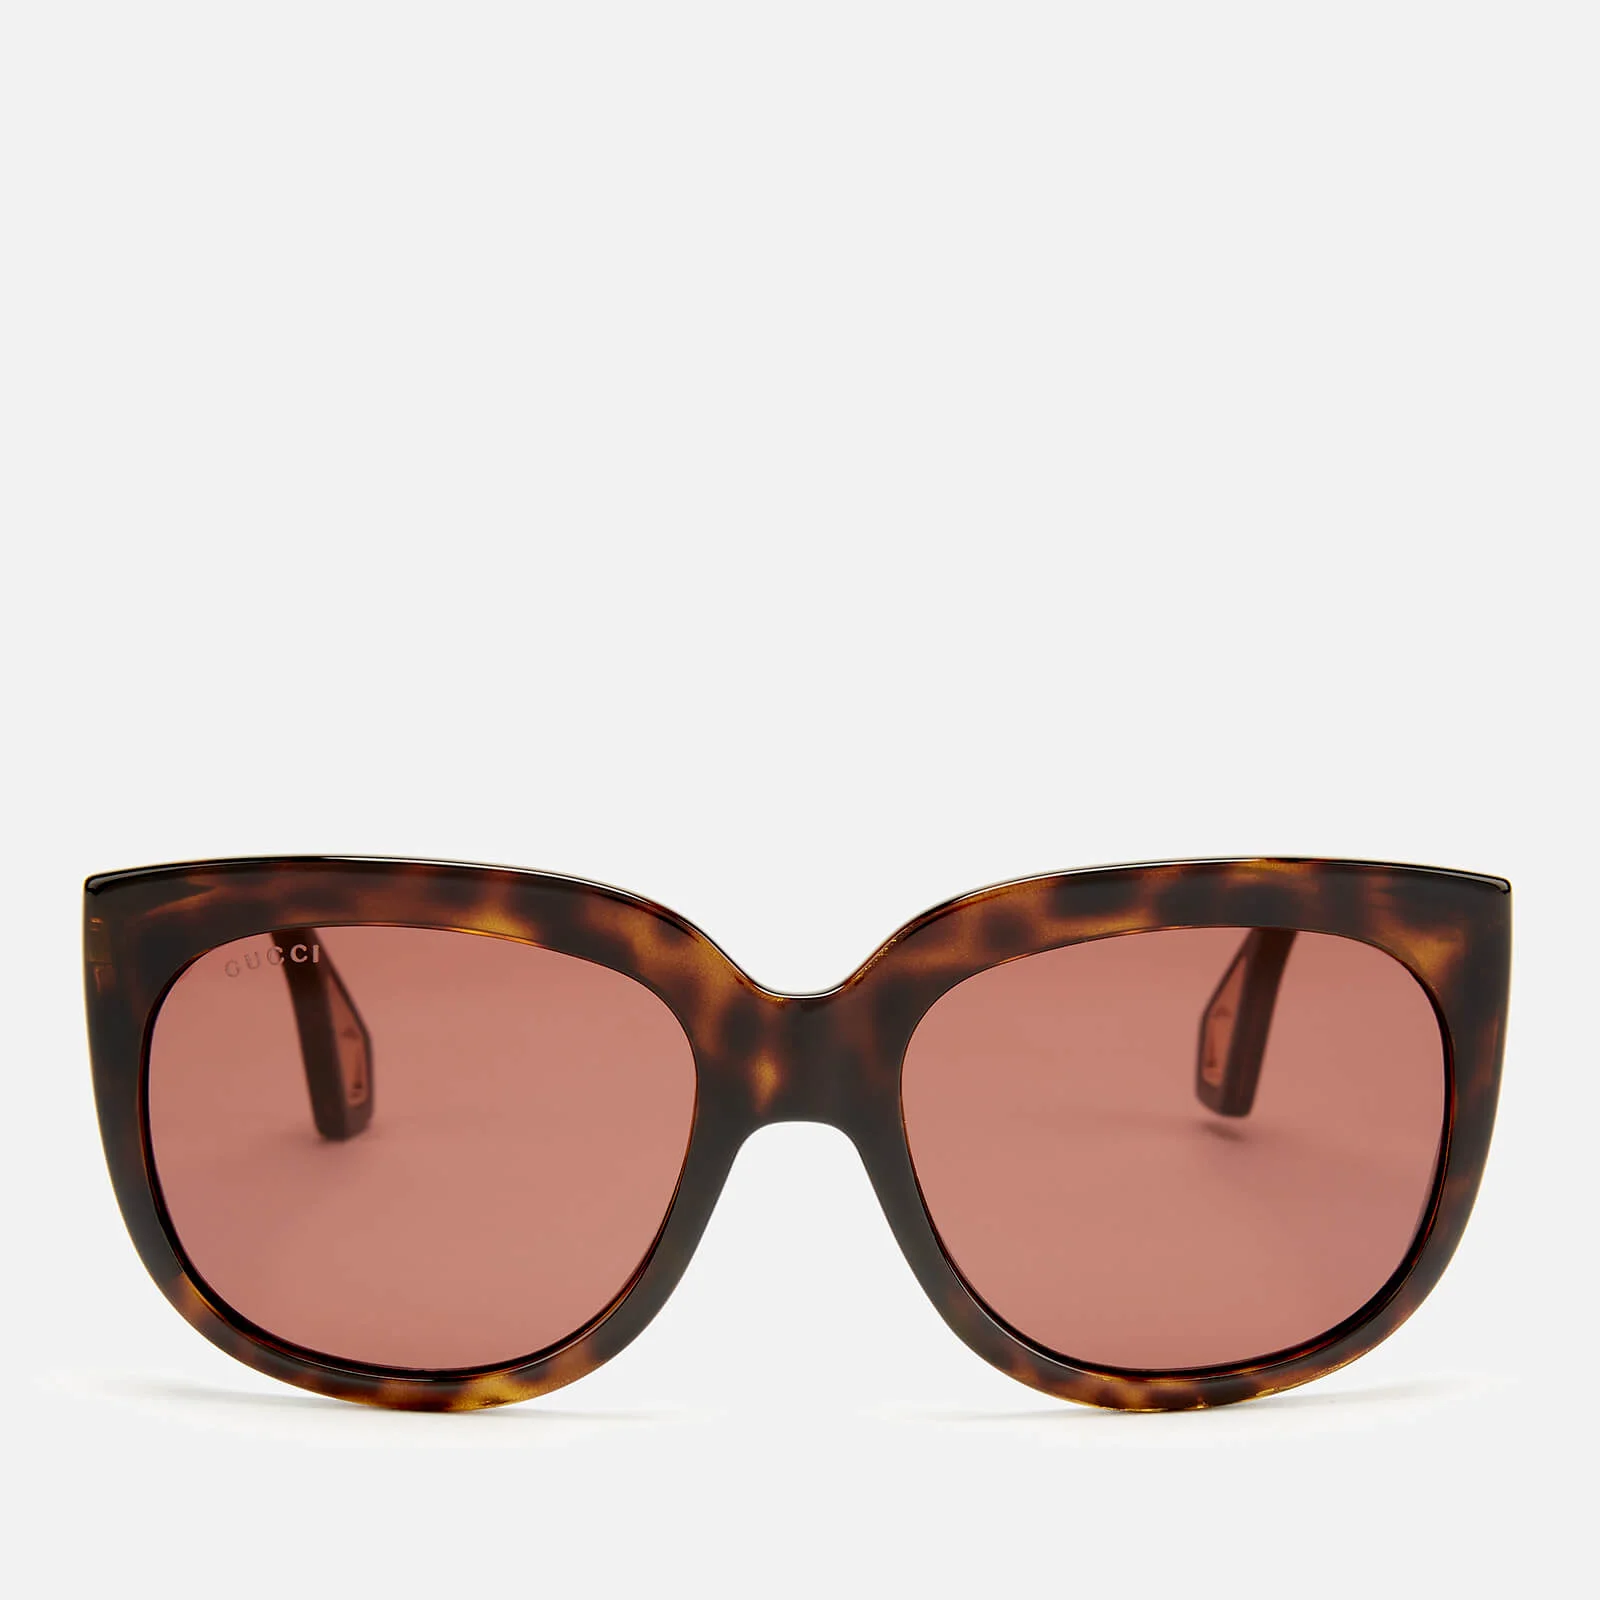 Gucci Women's Injection Visor Sunglasses - Havana/Brown Image 1